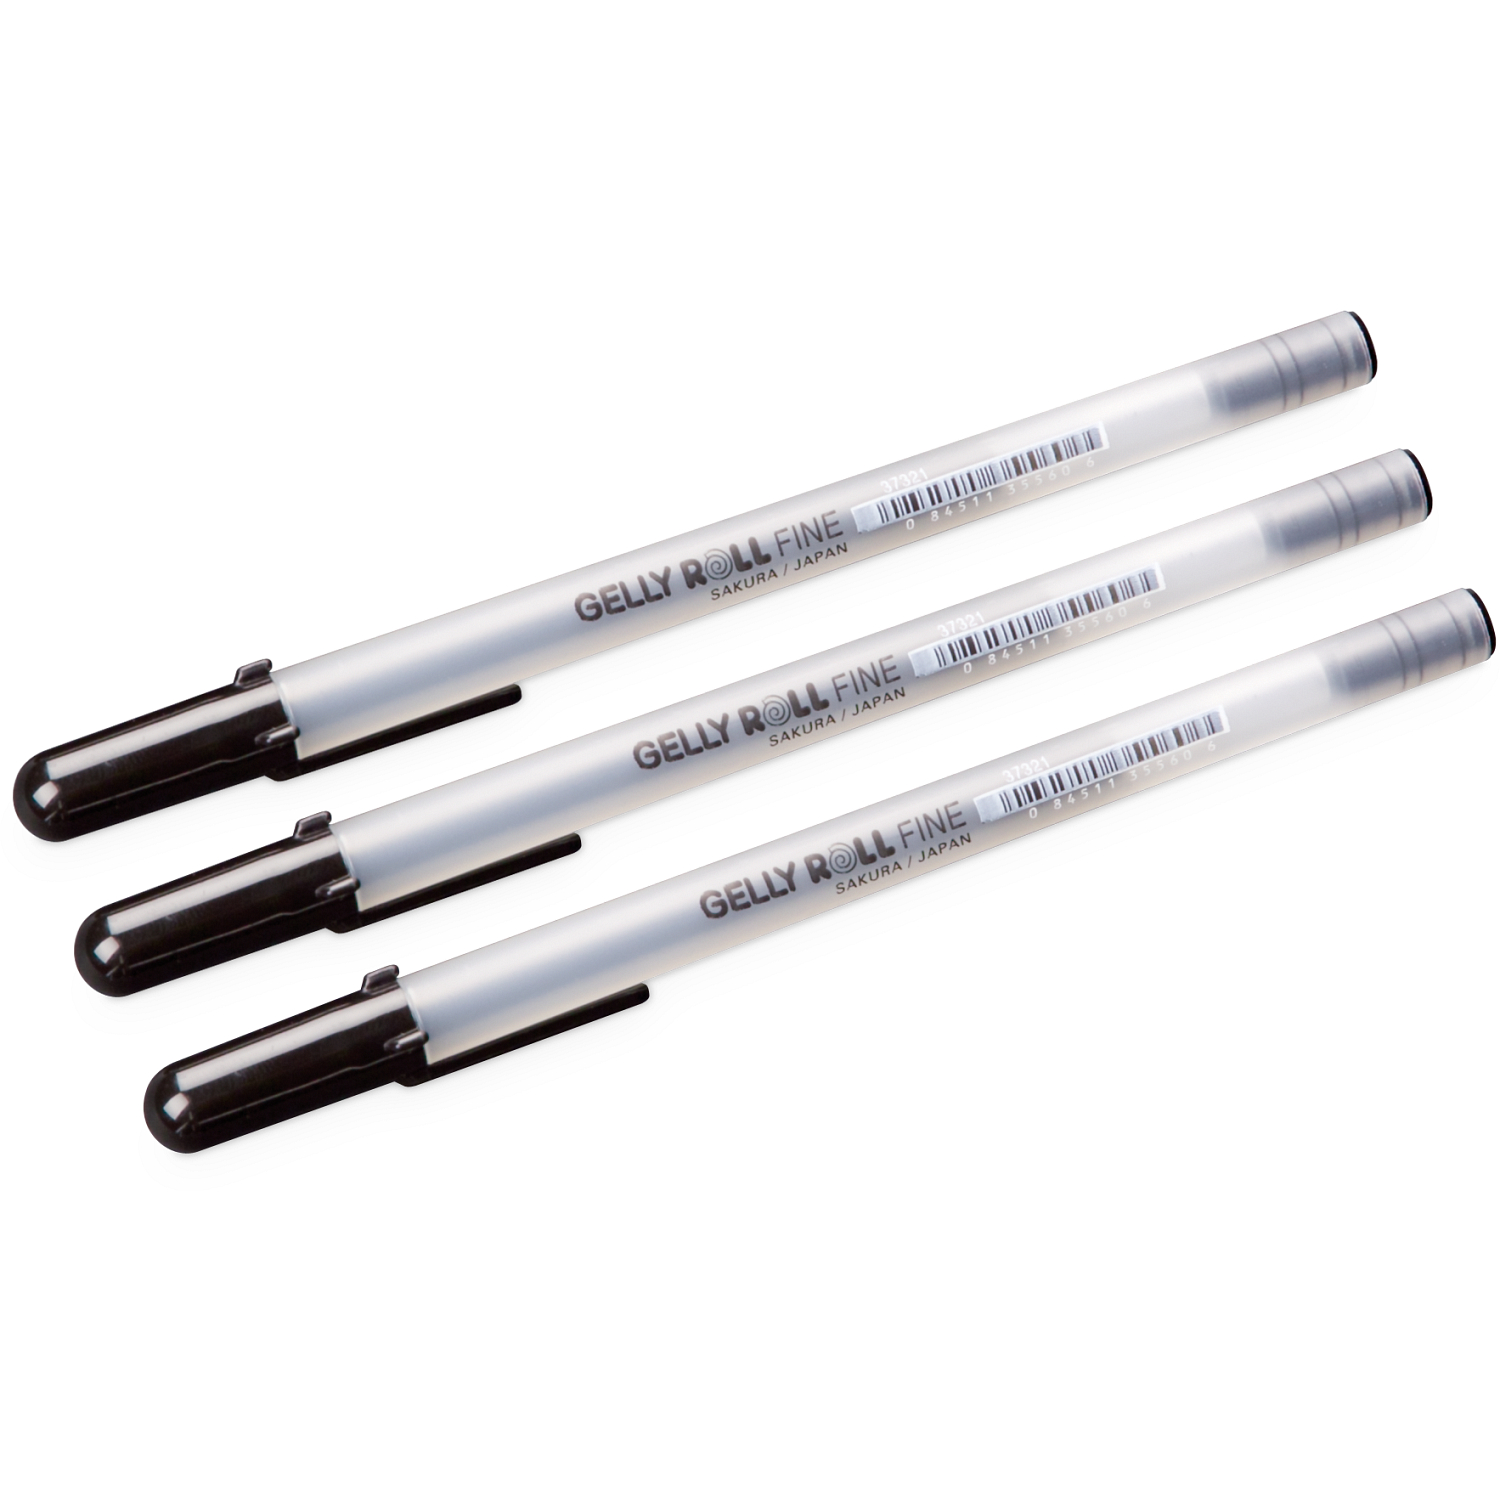 Gelly Roll Classic Gel Pens - Meininger Art Supply